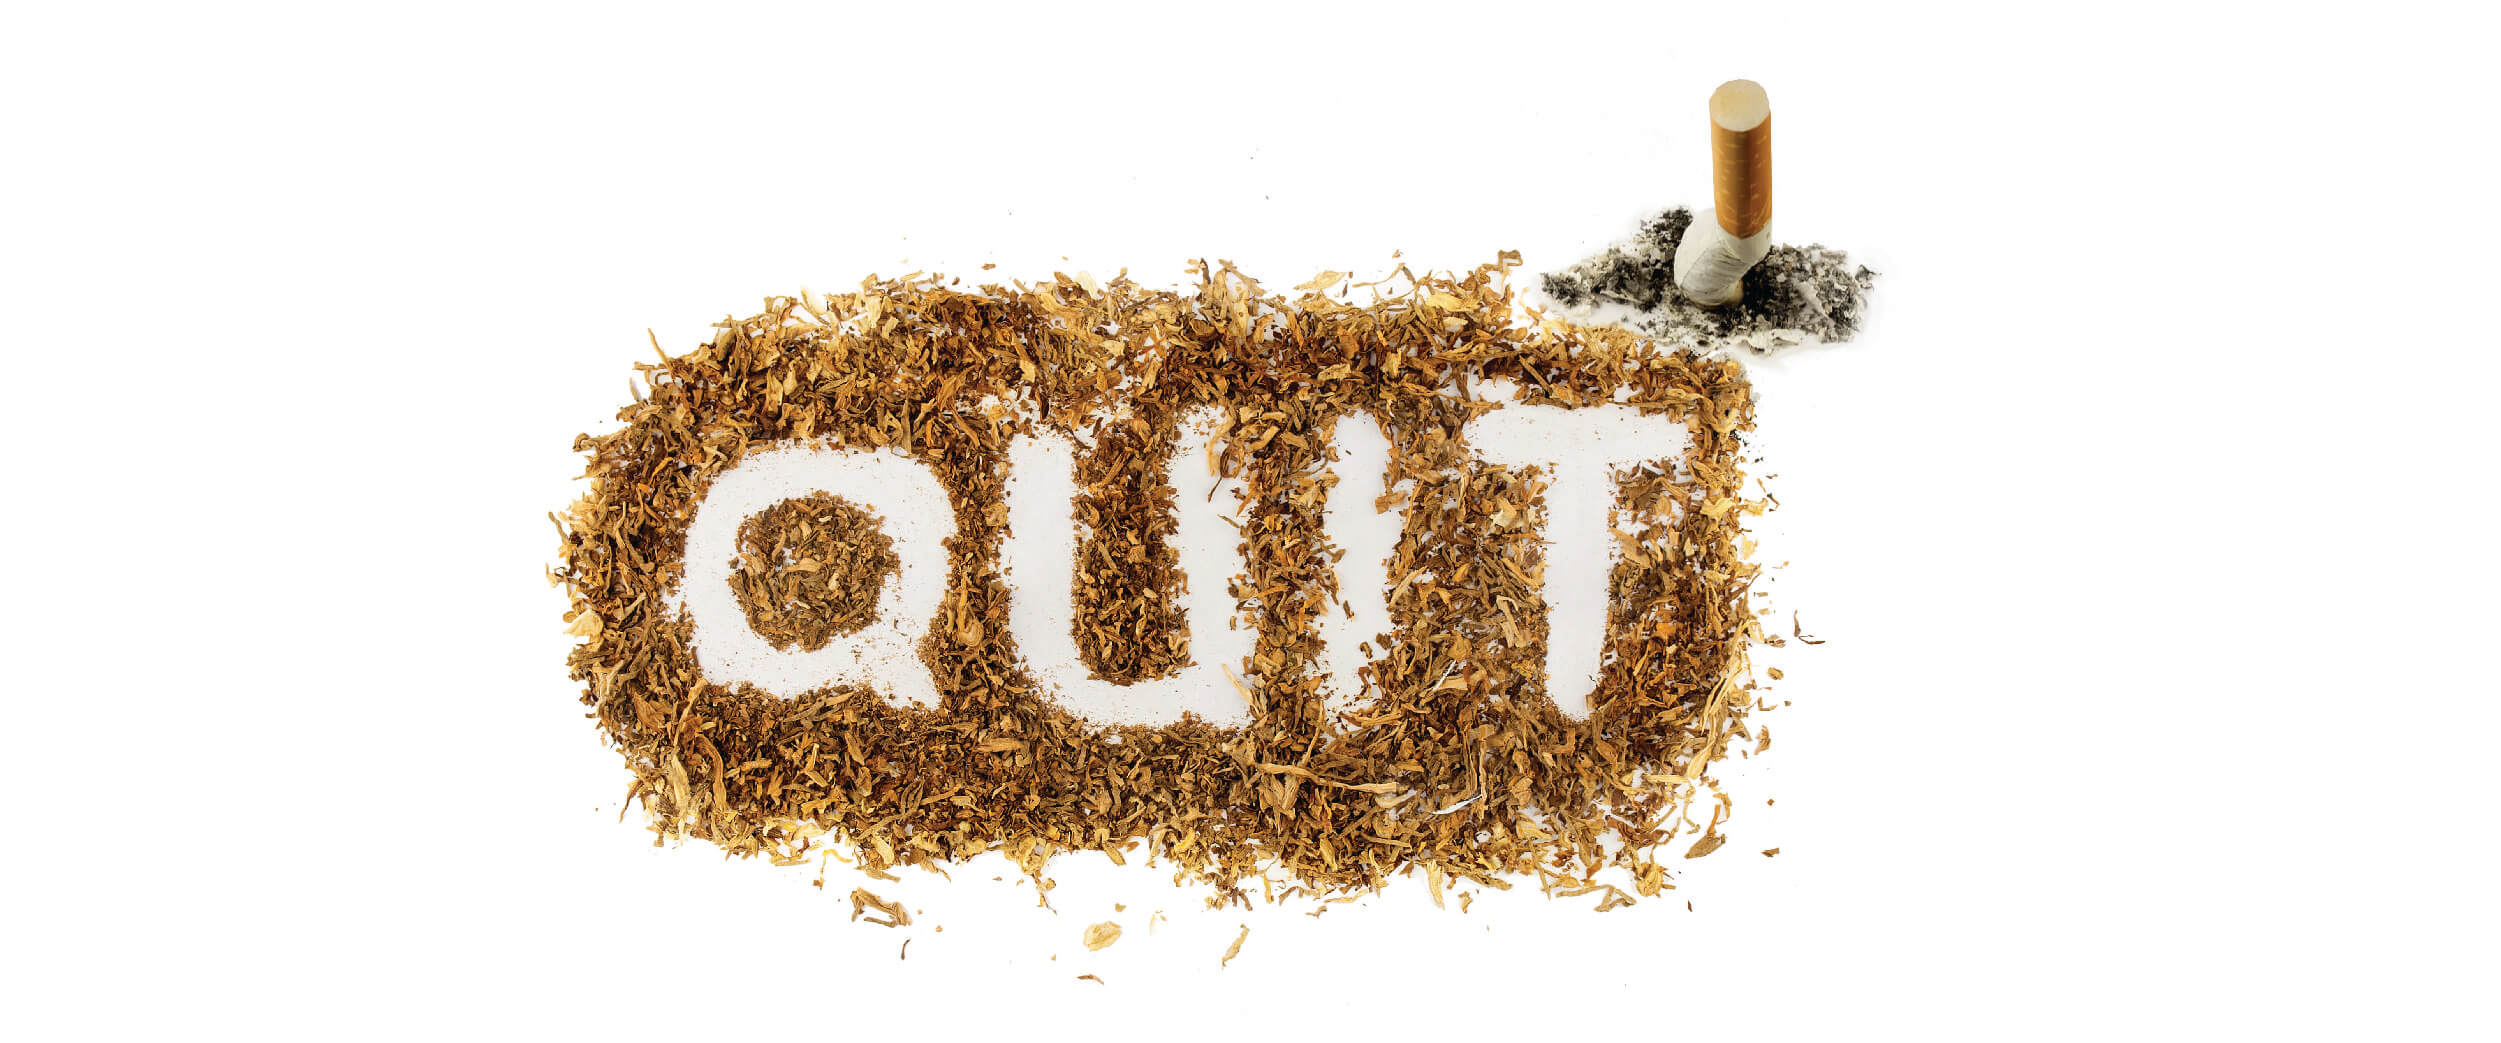 Making a Quit Plan to Kick Tobacco Habit